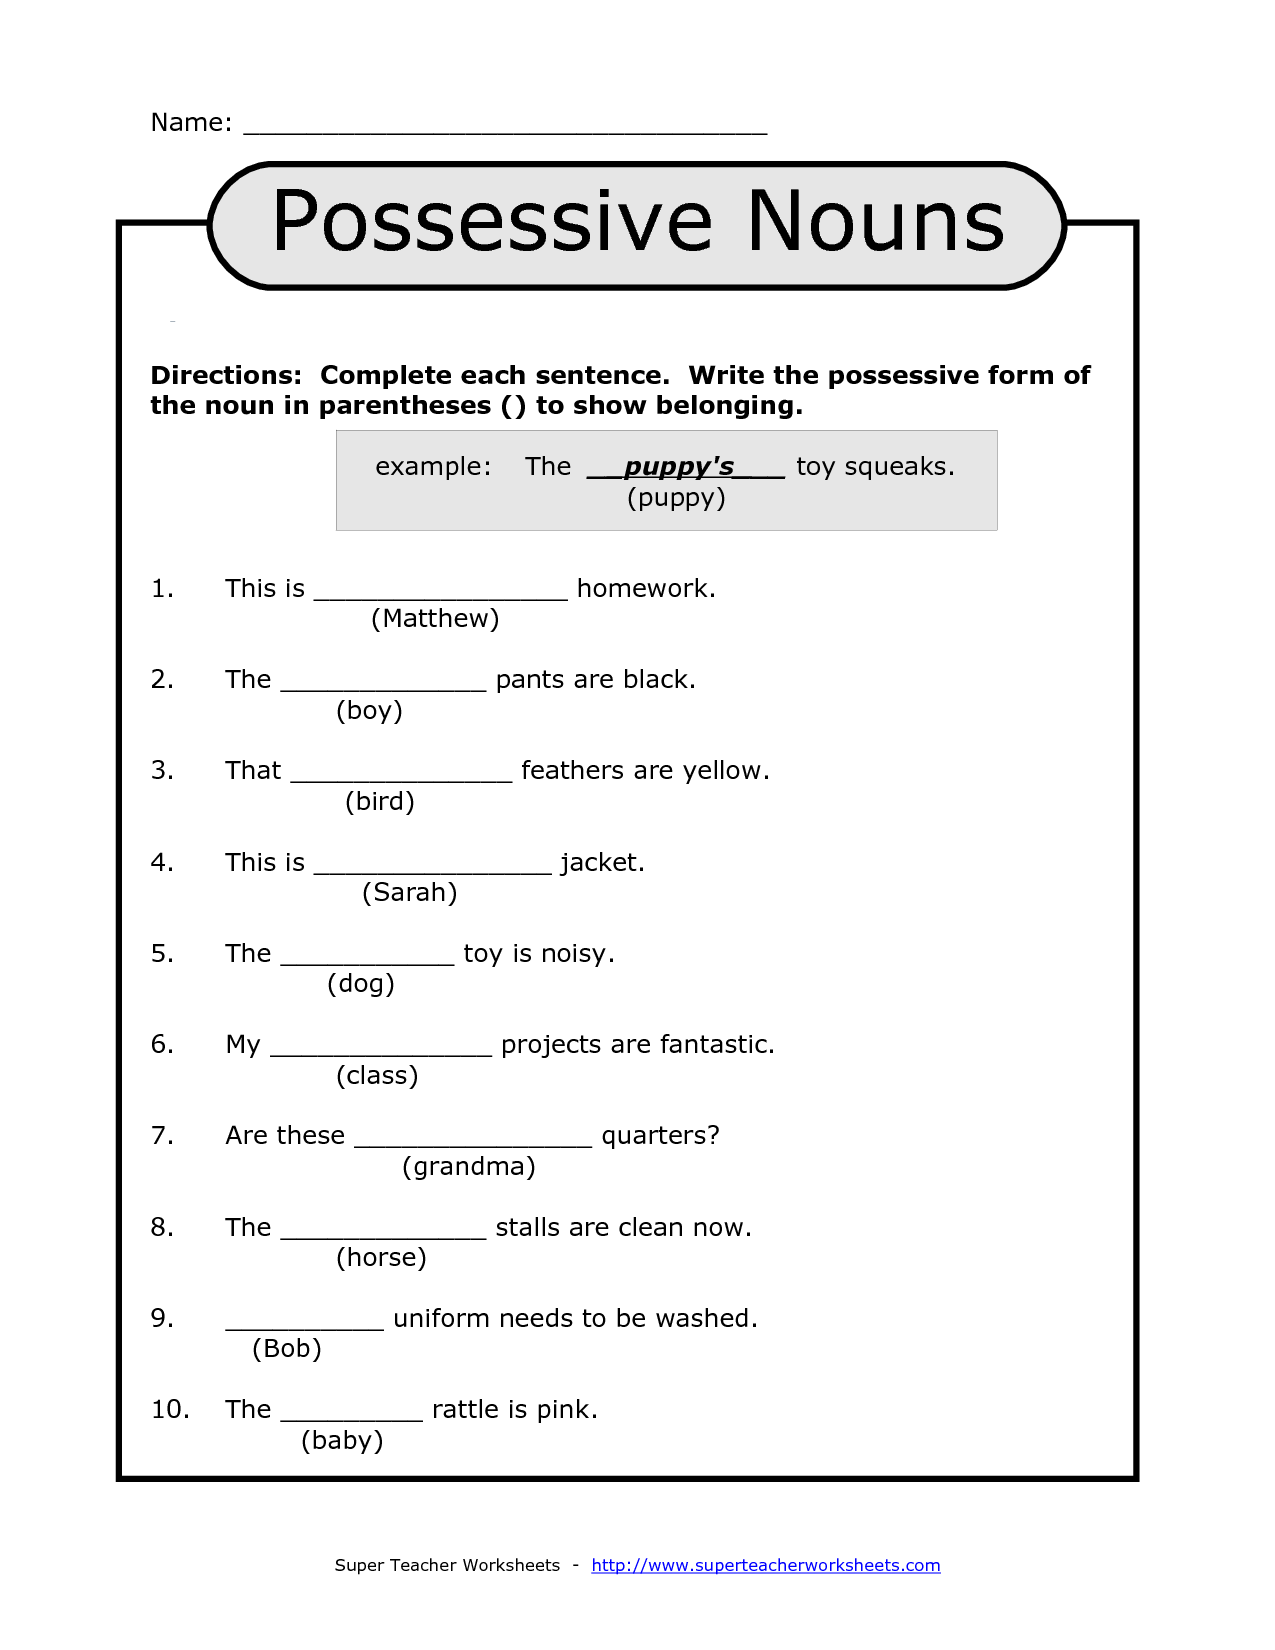 Possessive Nouns Worksheets Free Printable